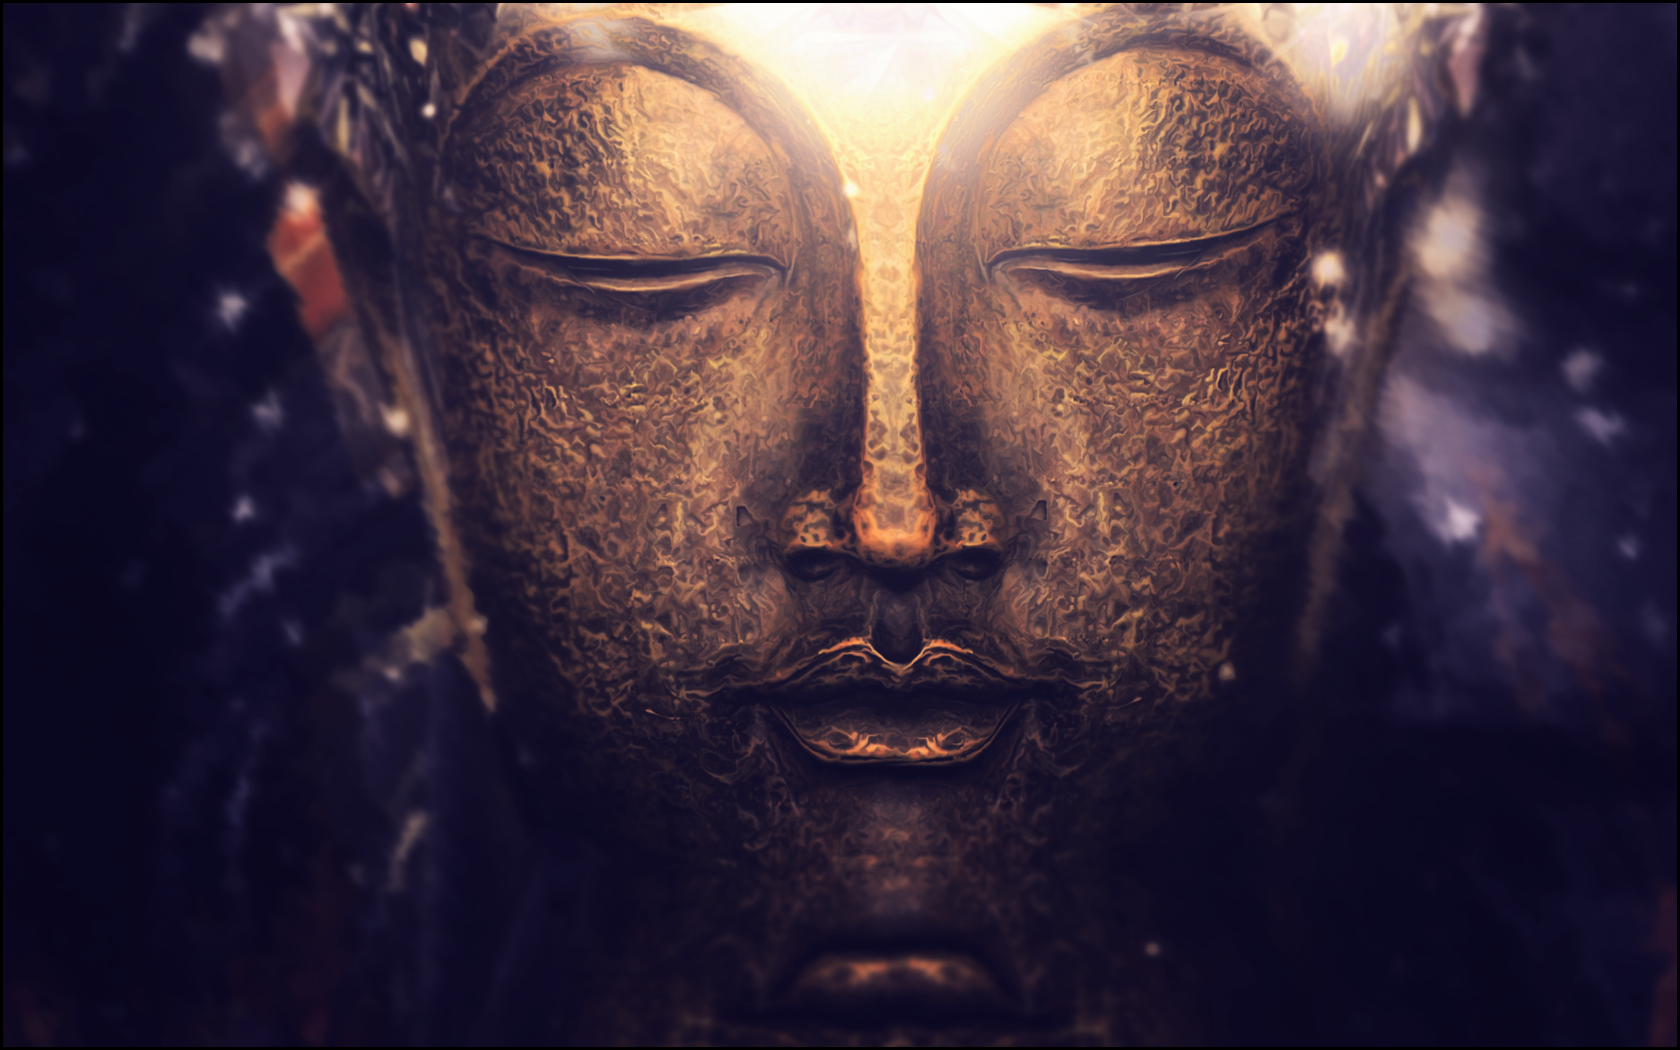 General 1680x1050 Buddha meditation spiritual Buddhism bokeh lights purple gold macro photography depth of field zen